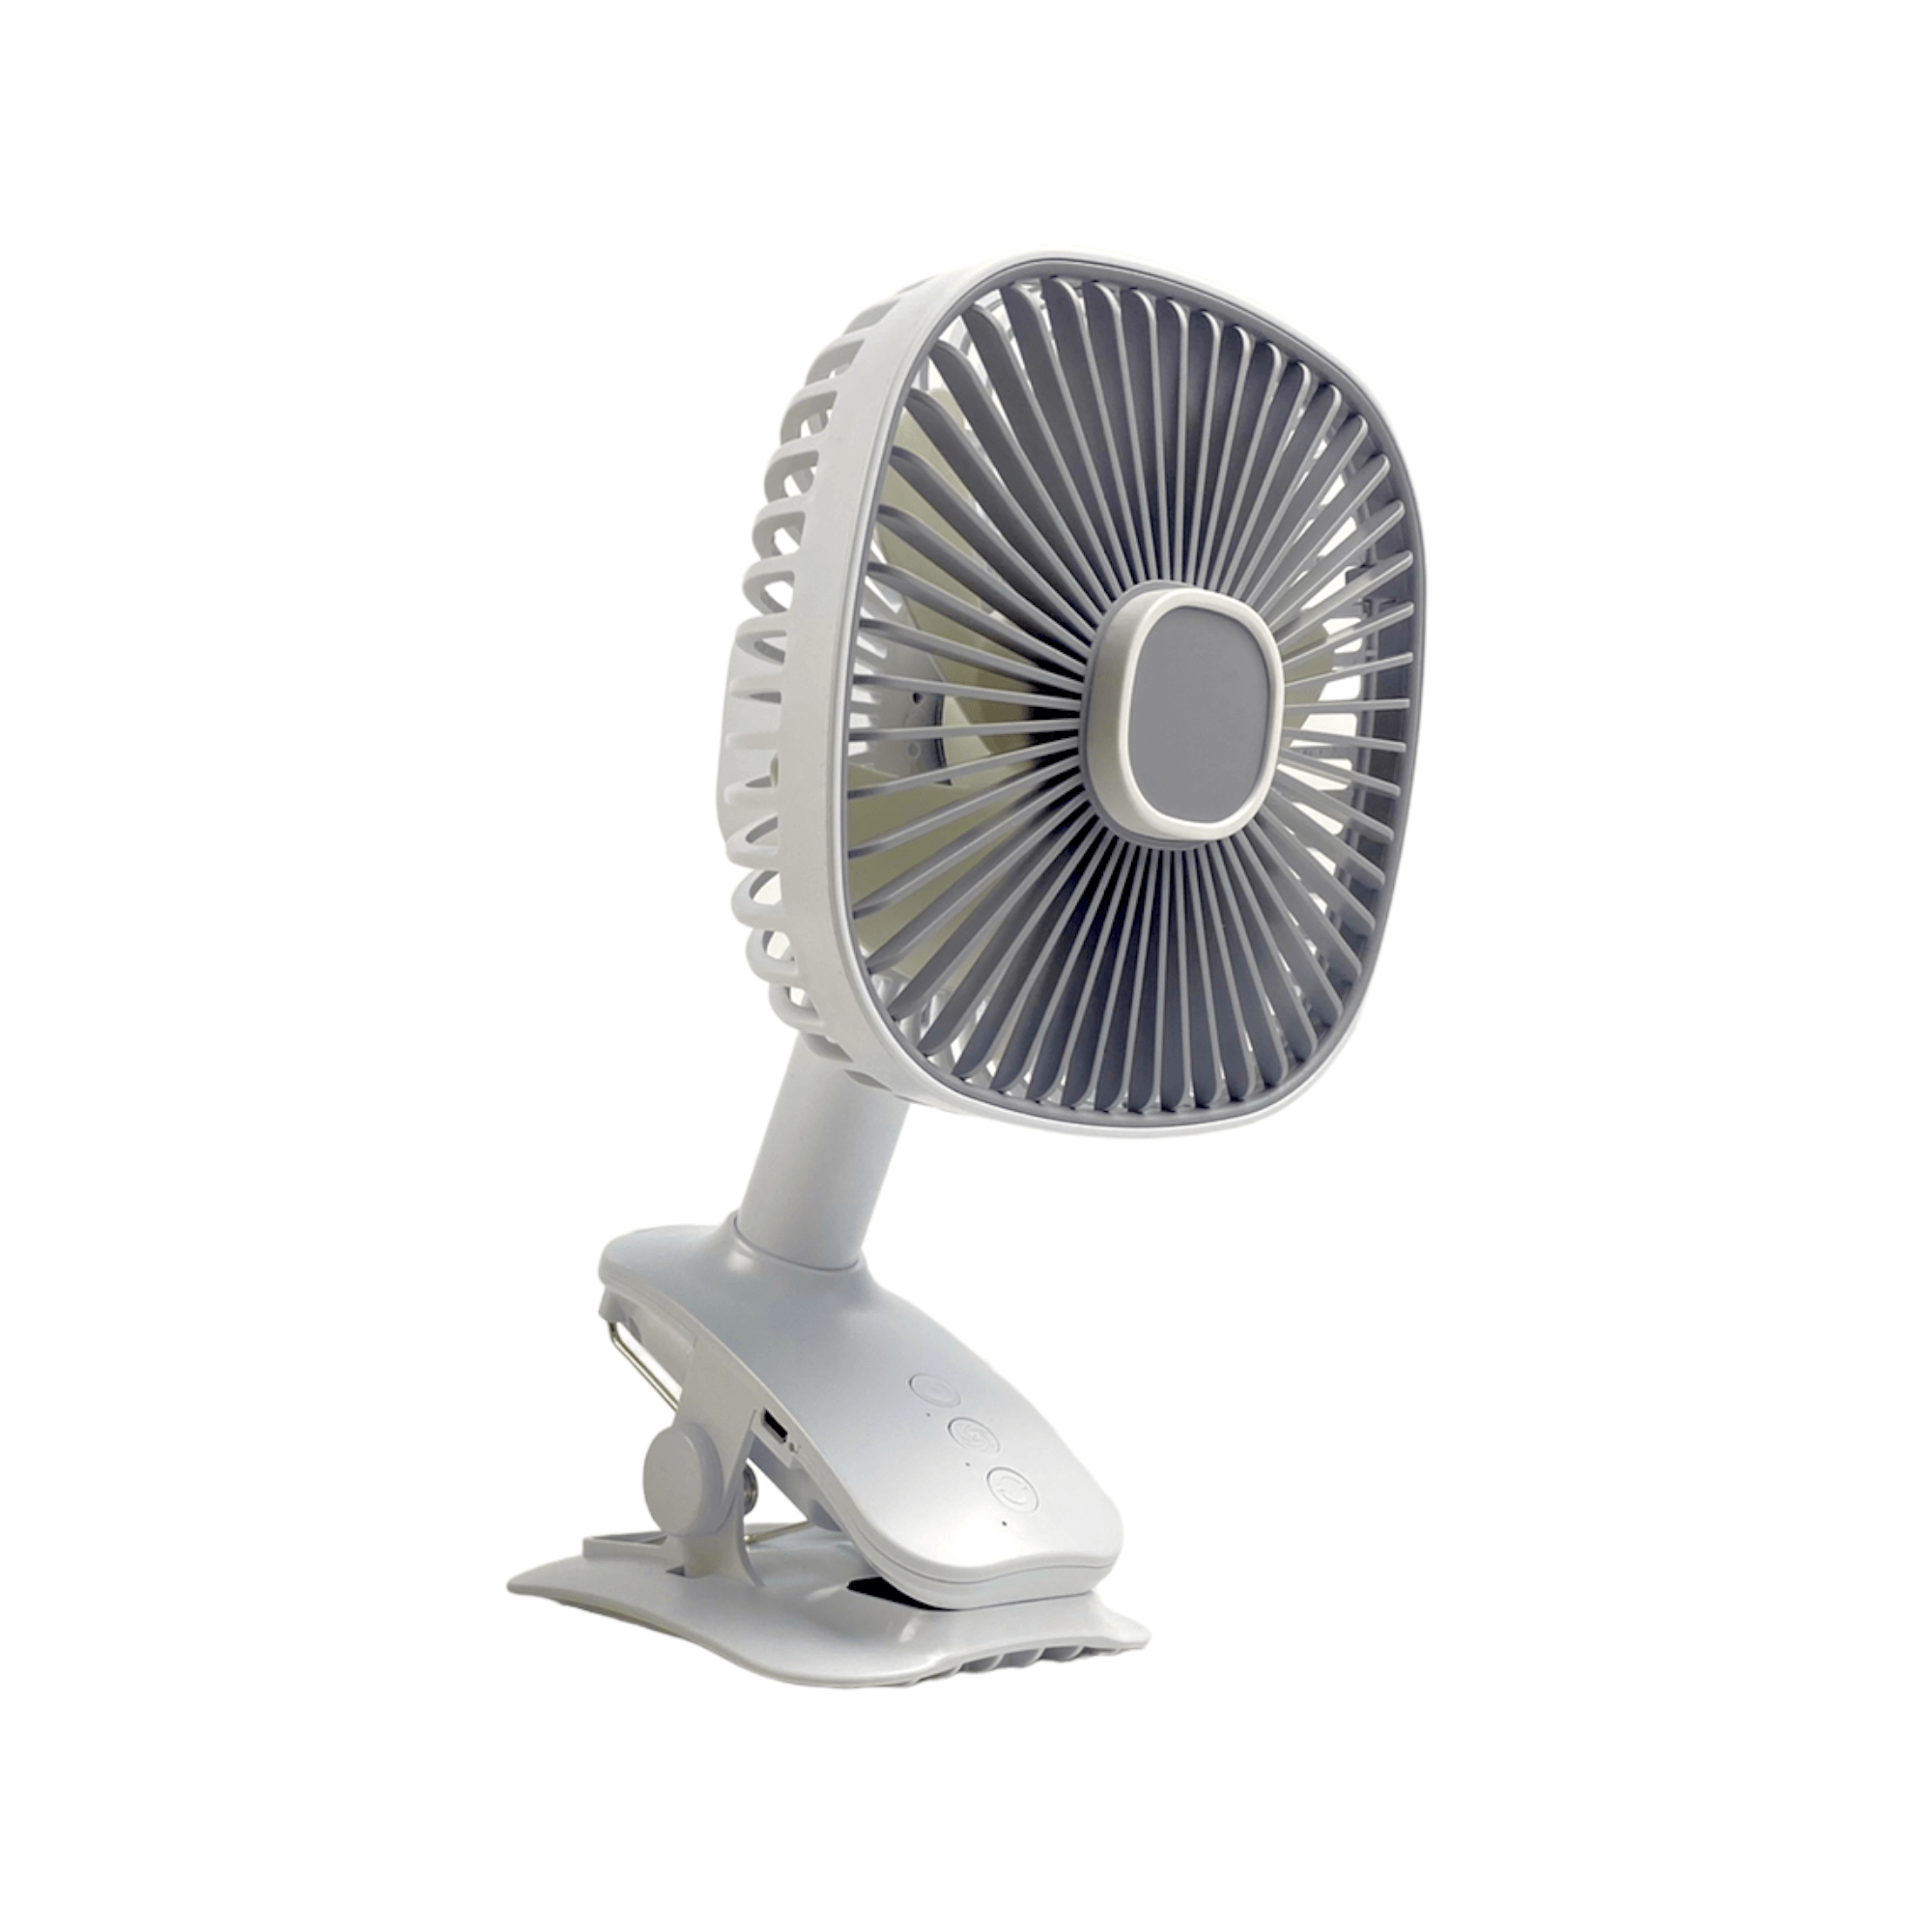 Original Jivi P12 Strong Winds Clip Fan Rotating Oscillating Fan Head